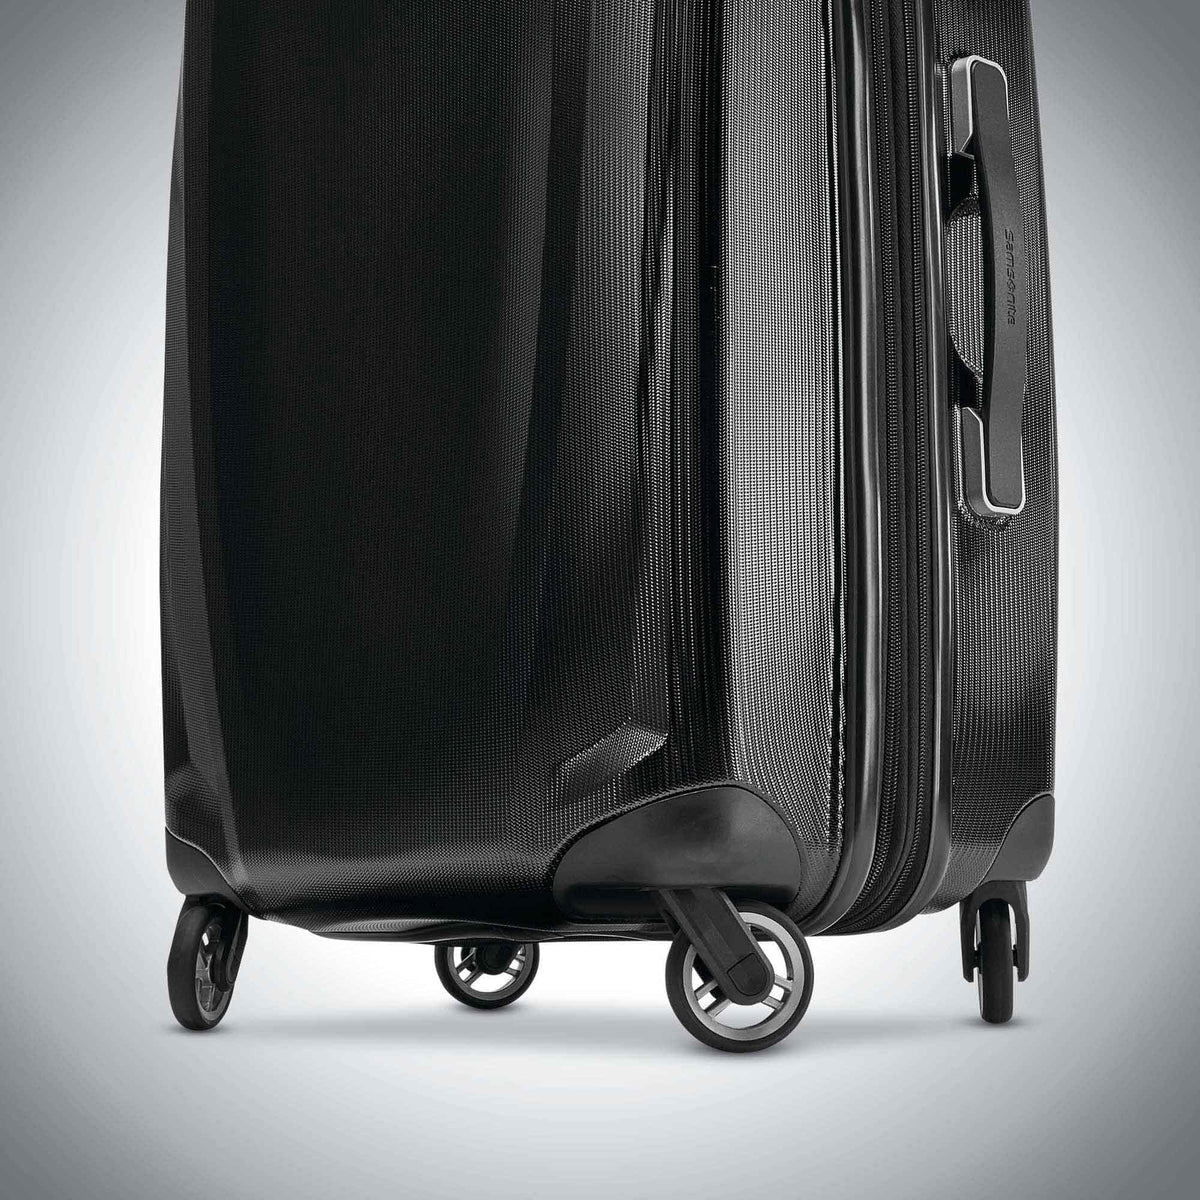 Samsonite Winfield 3 Deluxe 25" Medium Spinner Luggage